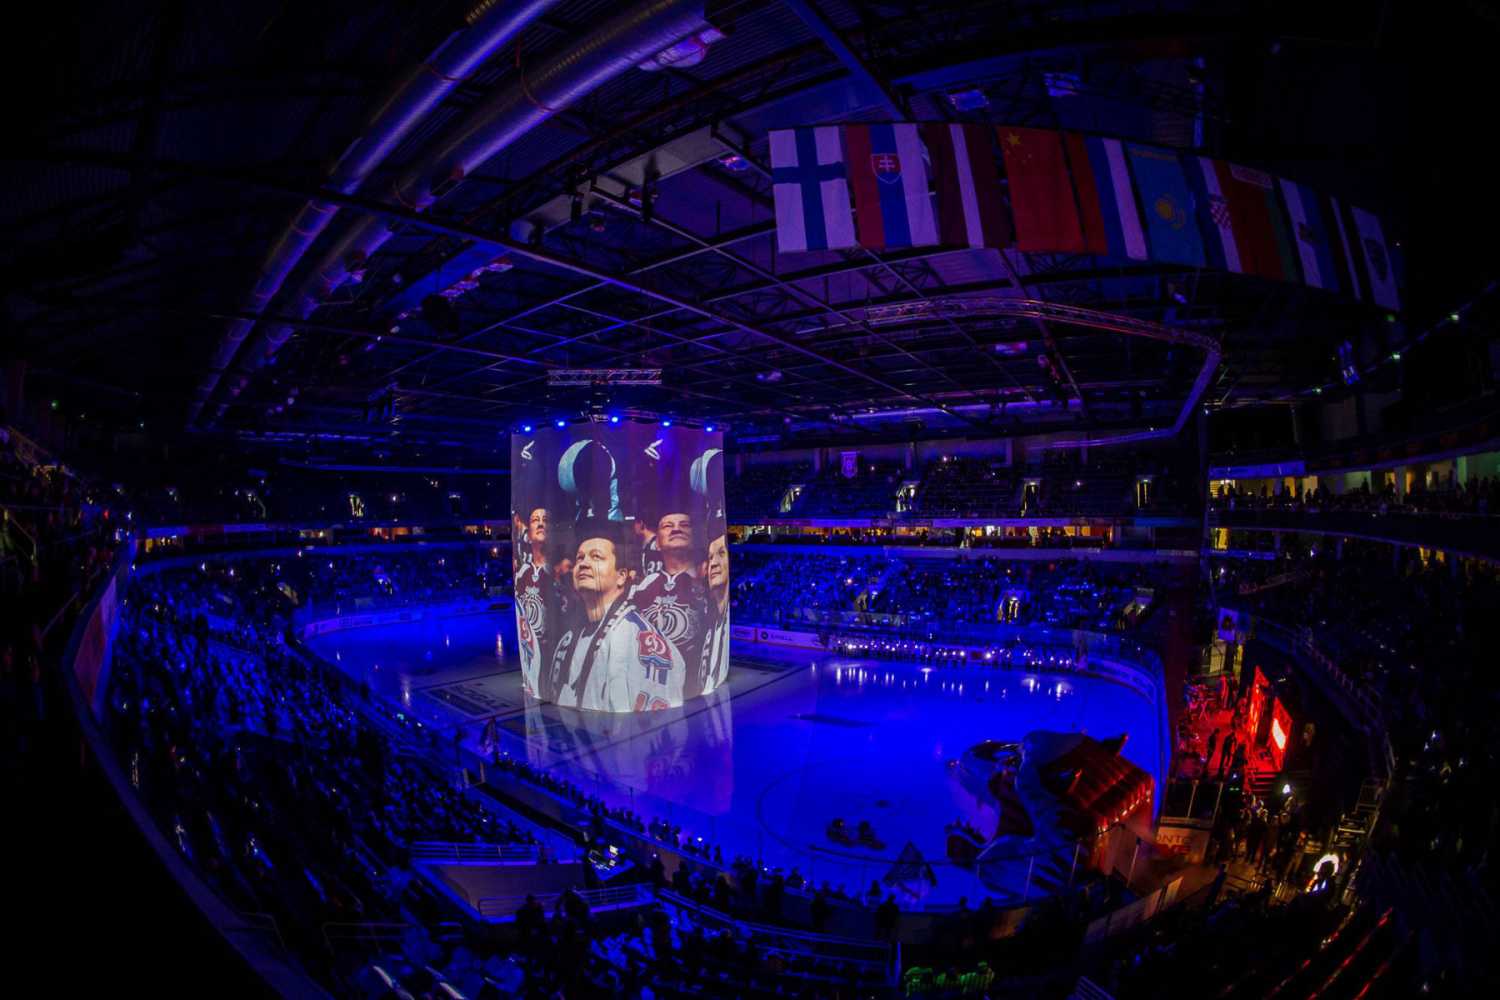 The Arena Riga has been home to the Kontinental Hockey League club Dinamo Riga since 2008